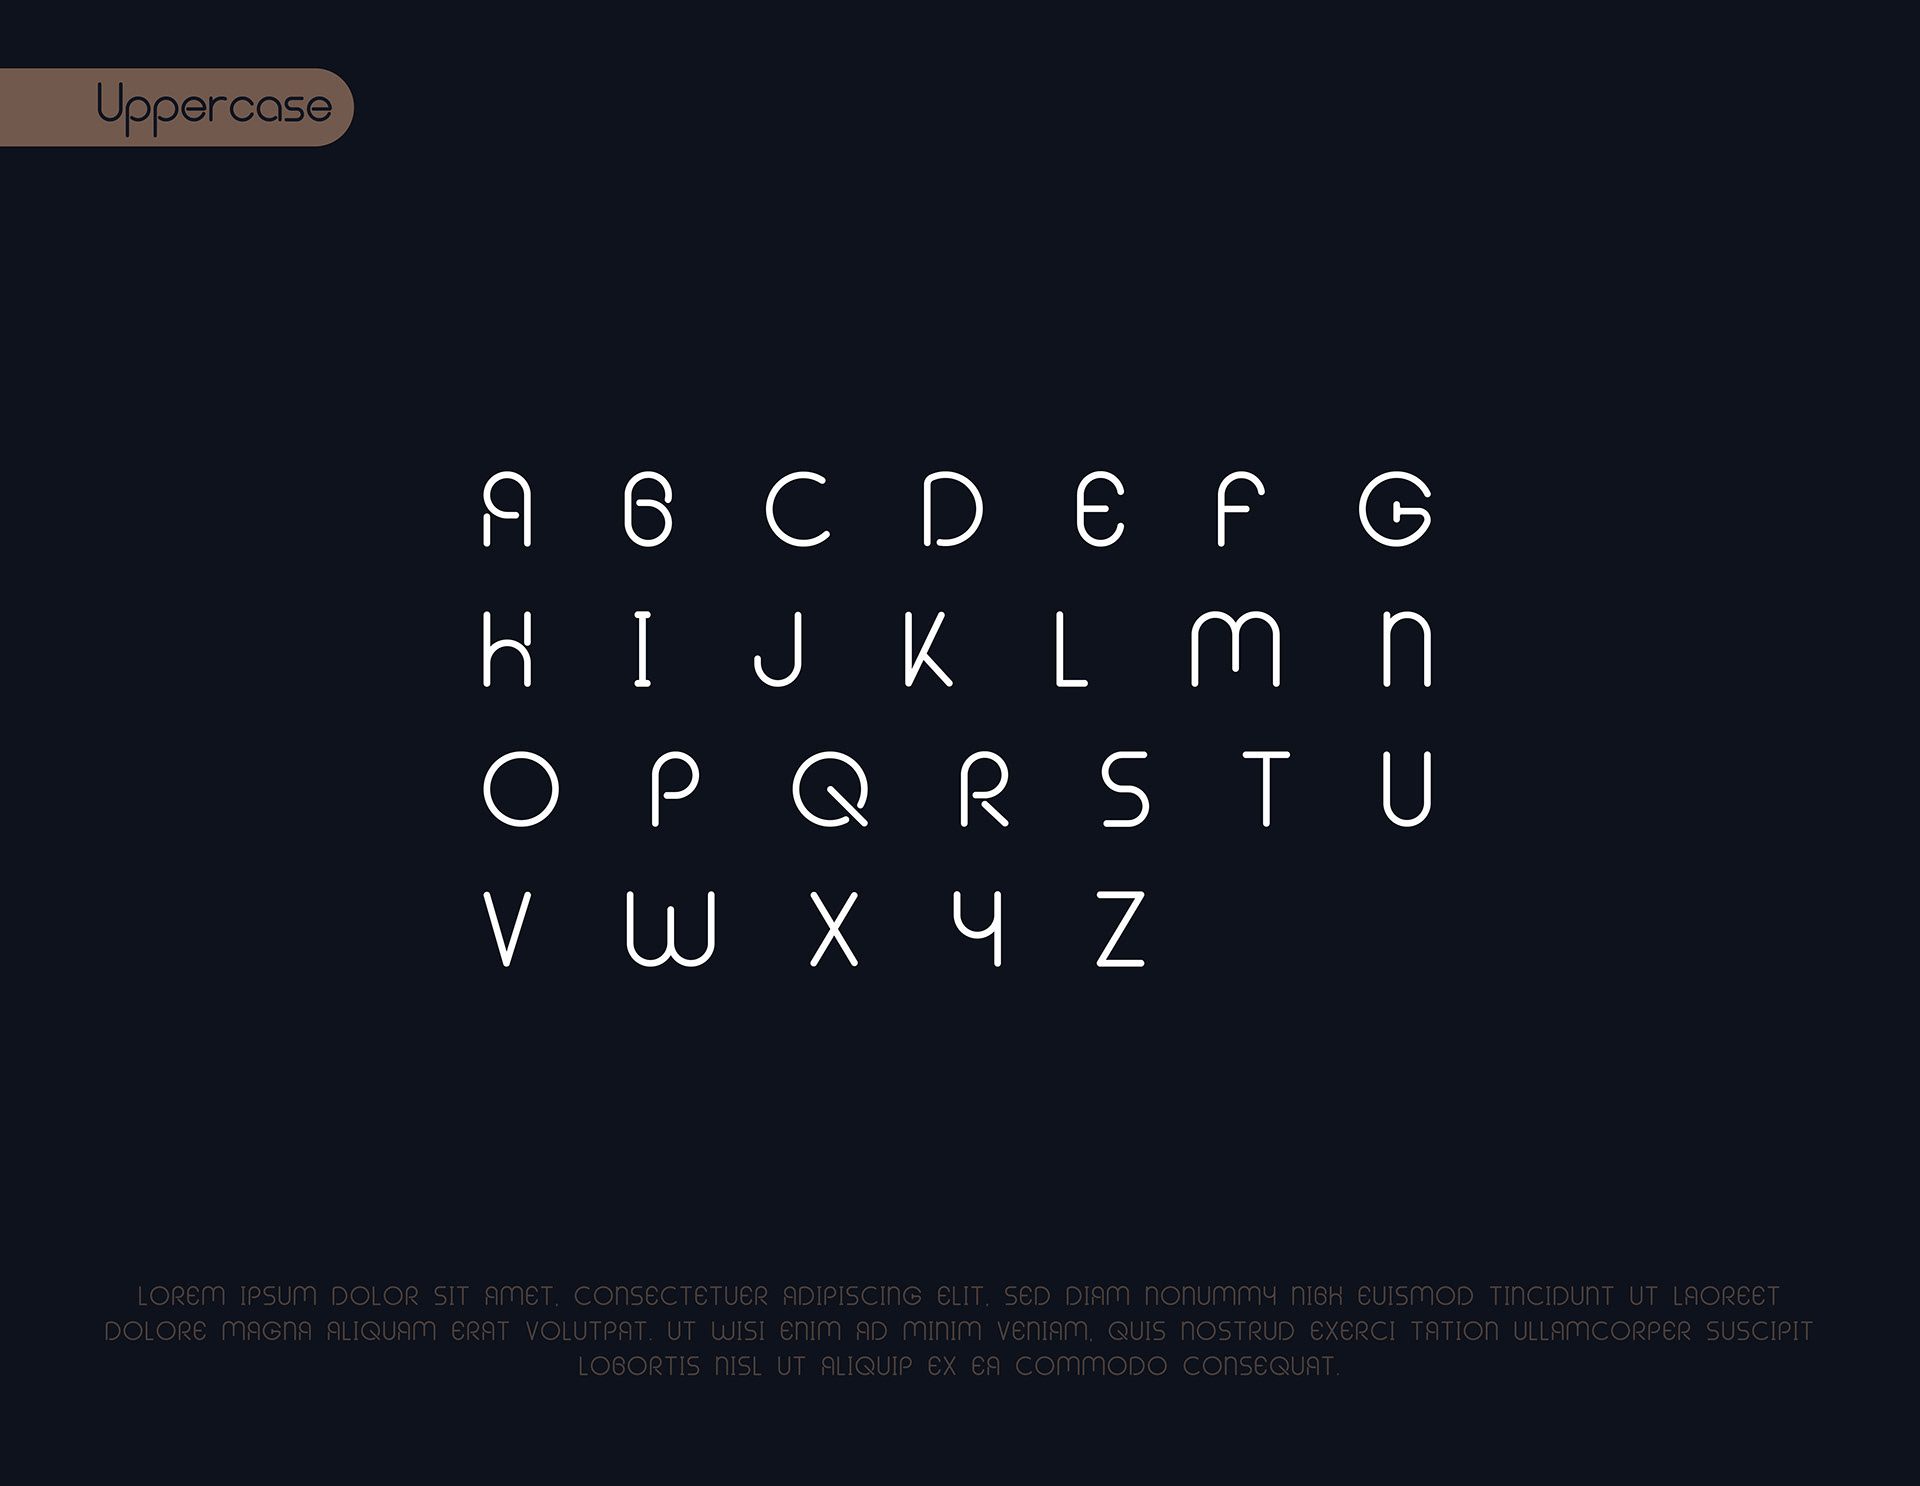 Waxe Free Typeface - sans-serif